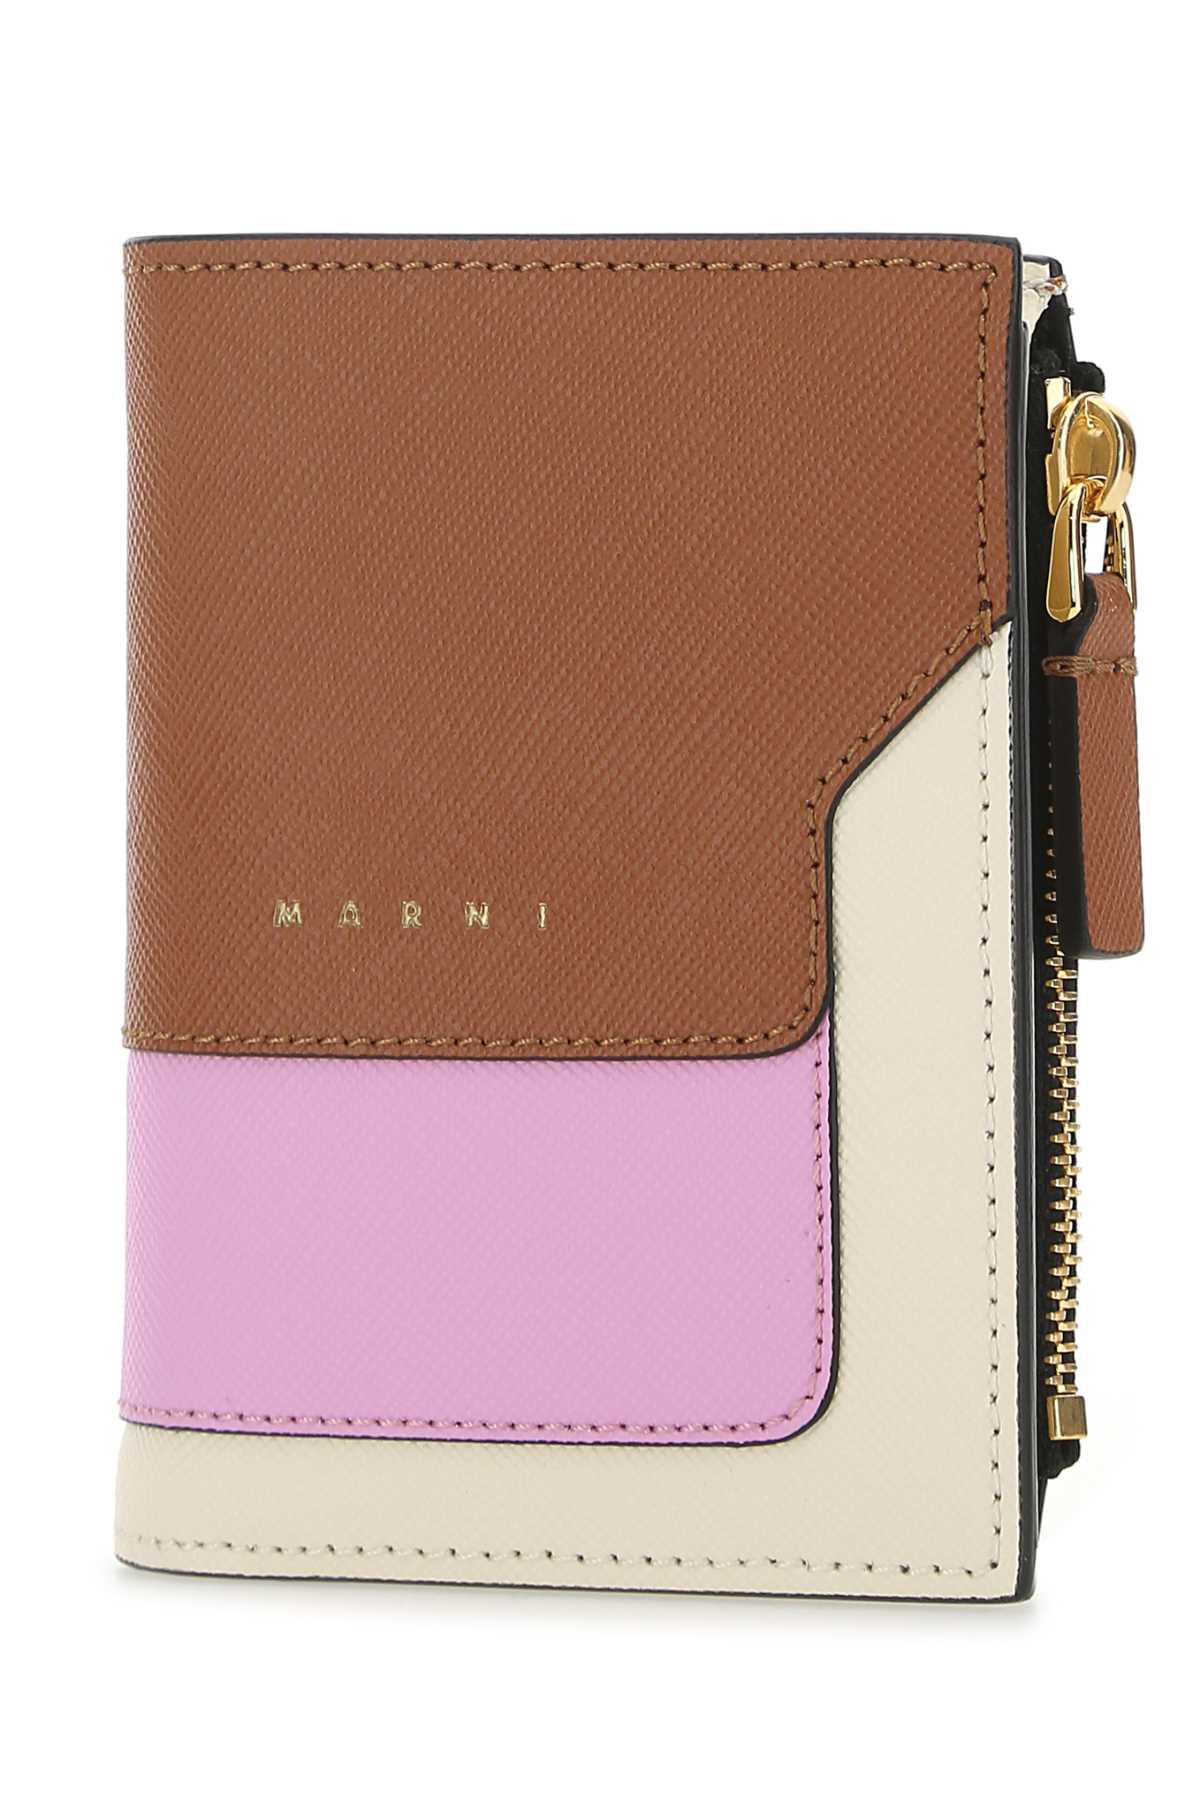 Marni Multicolor Leather Wallet In Z565n